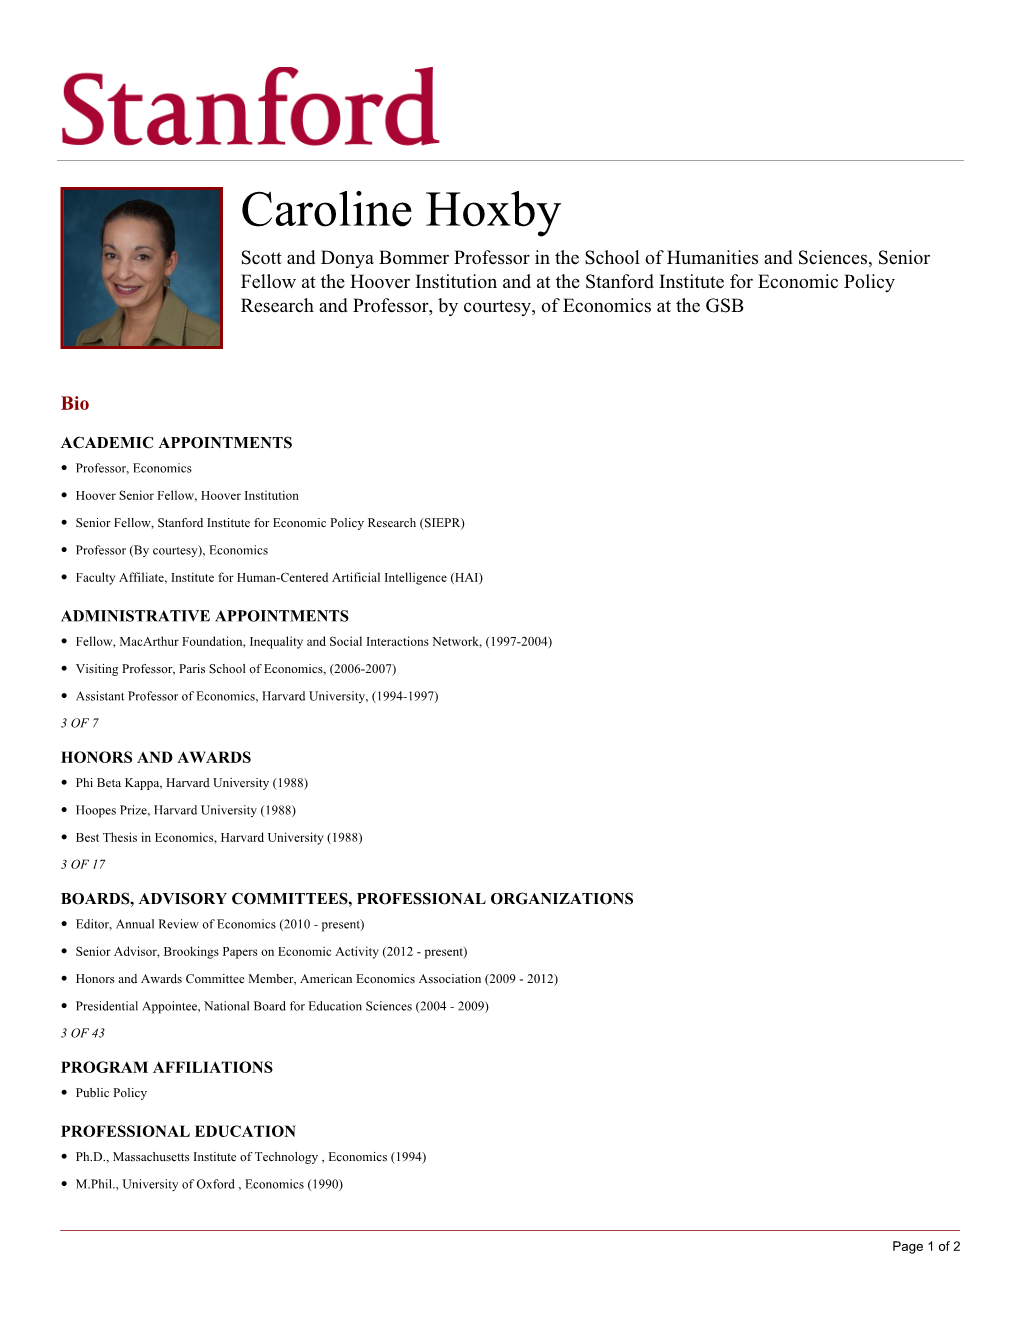 Caroline Hoxby